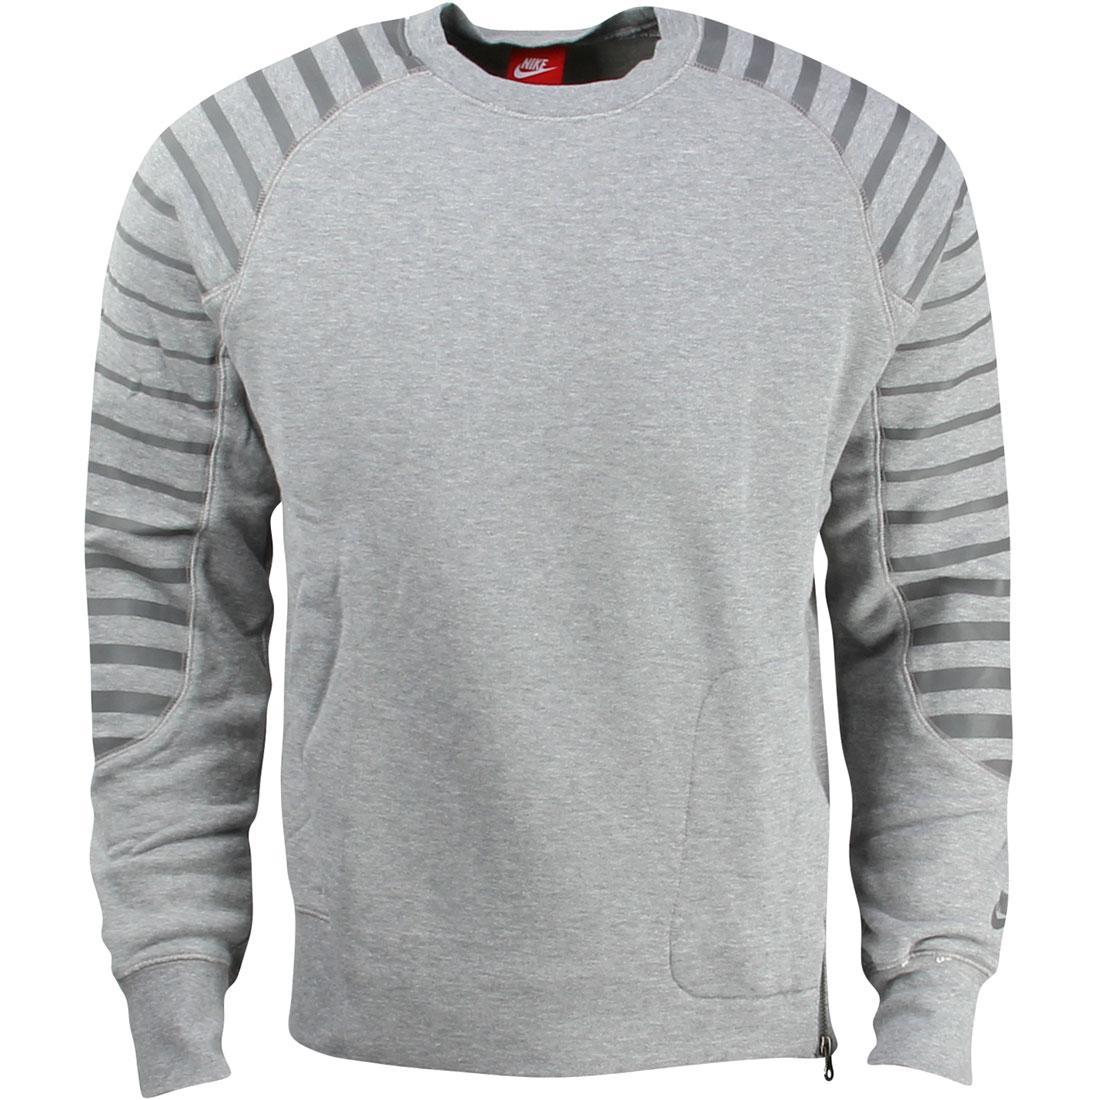 $89.99 630948-063 Nike Men RU Track And Field Crew Sweater gray dark ...